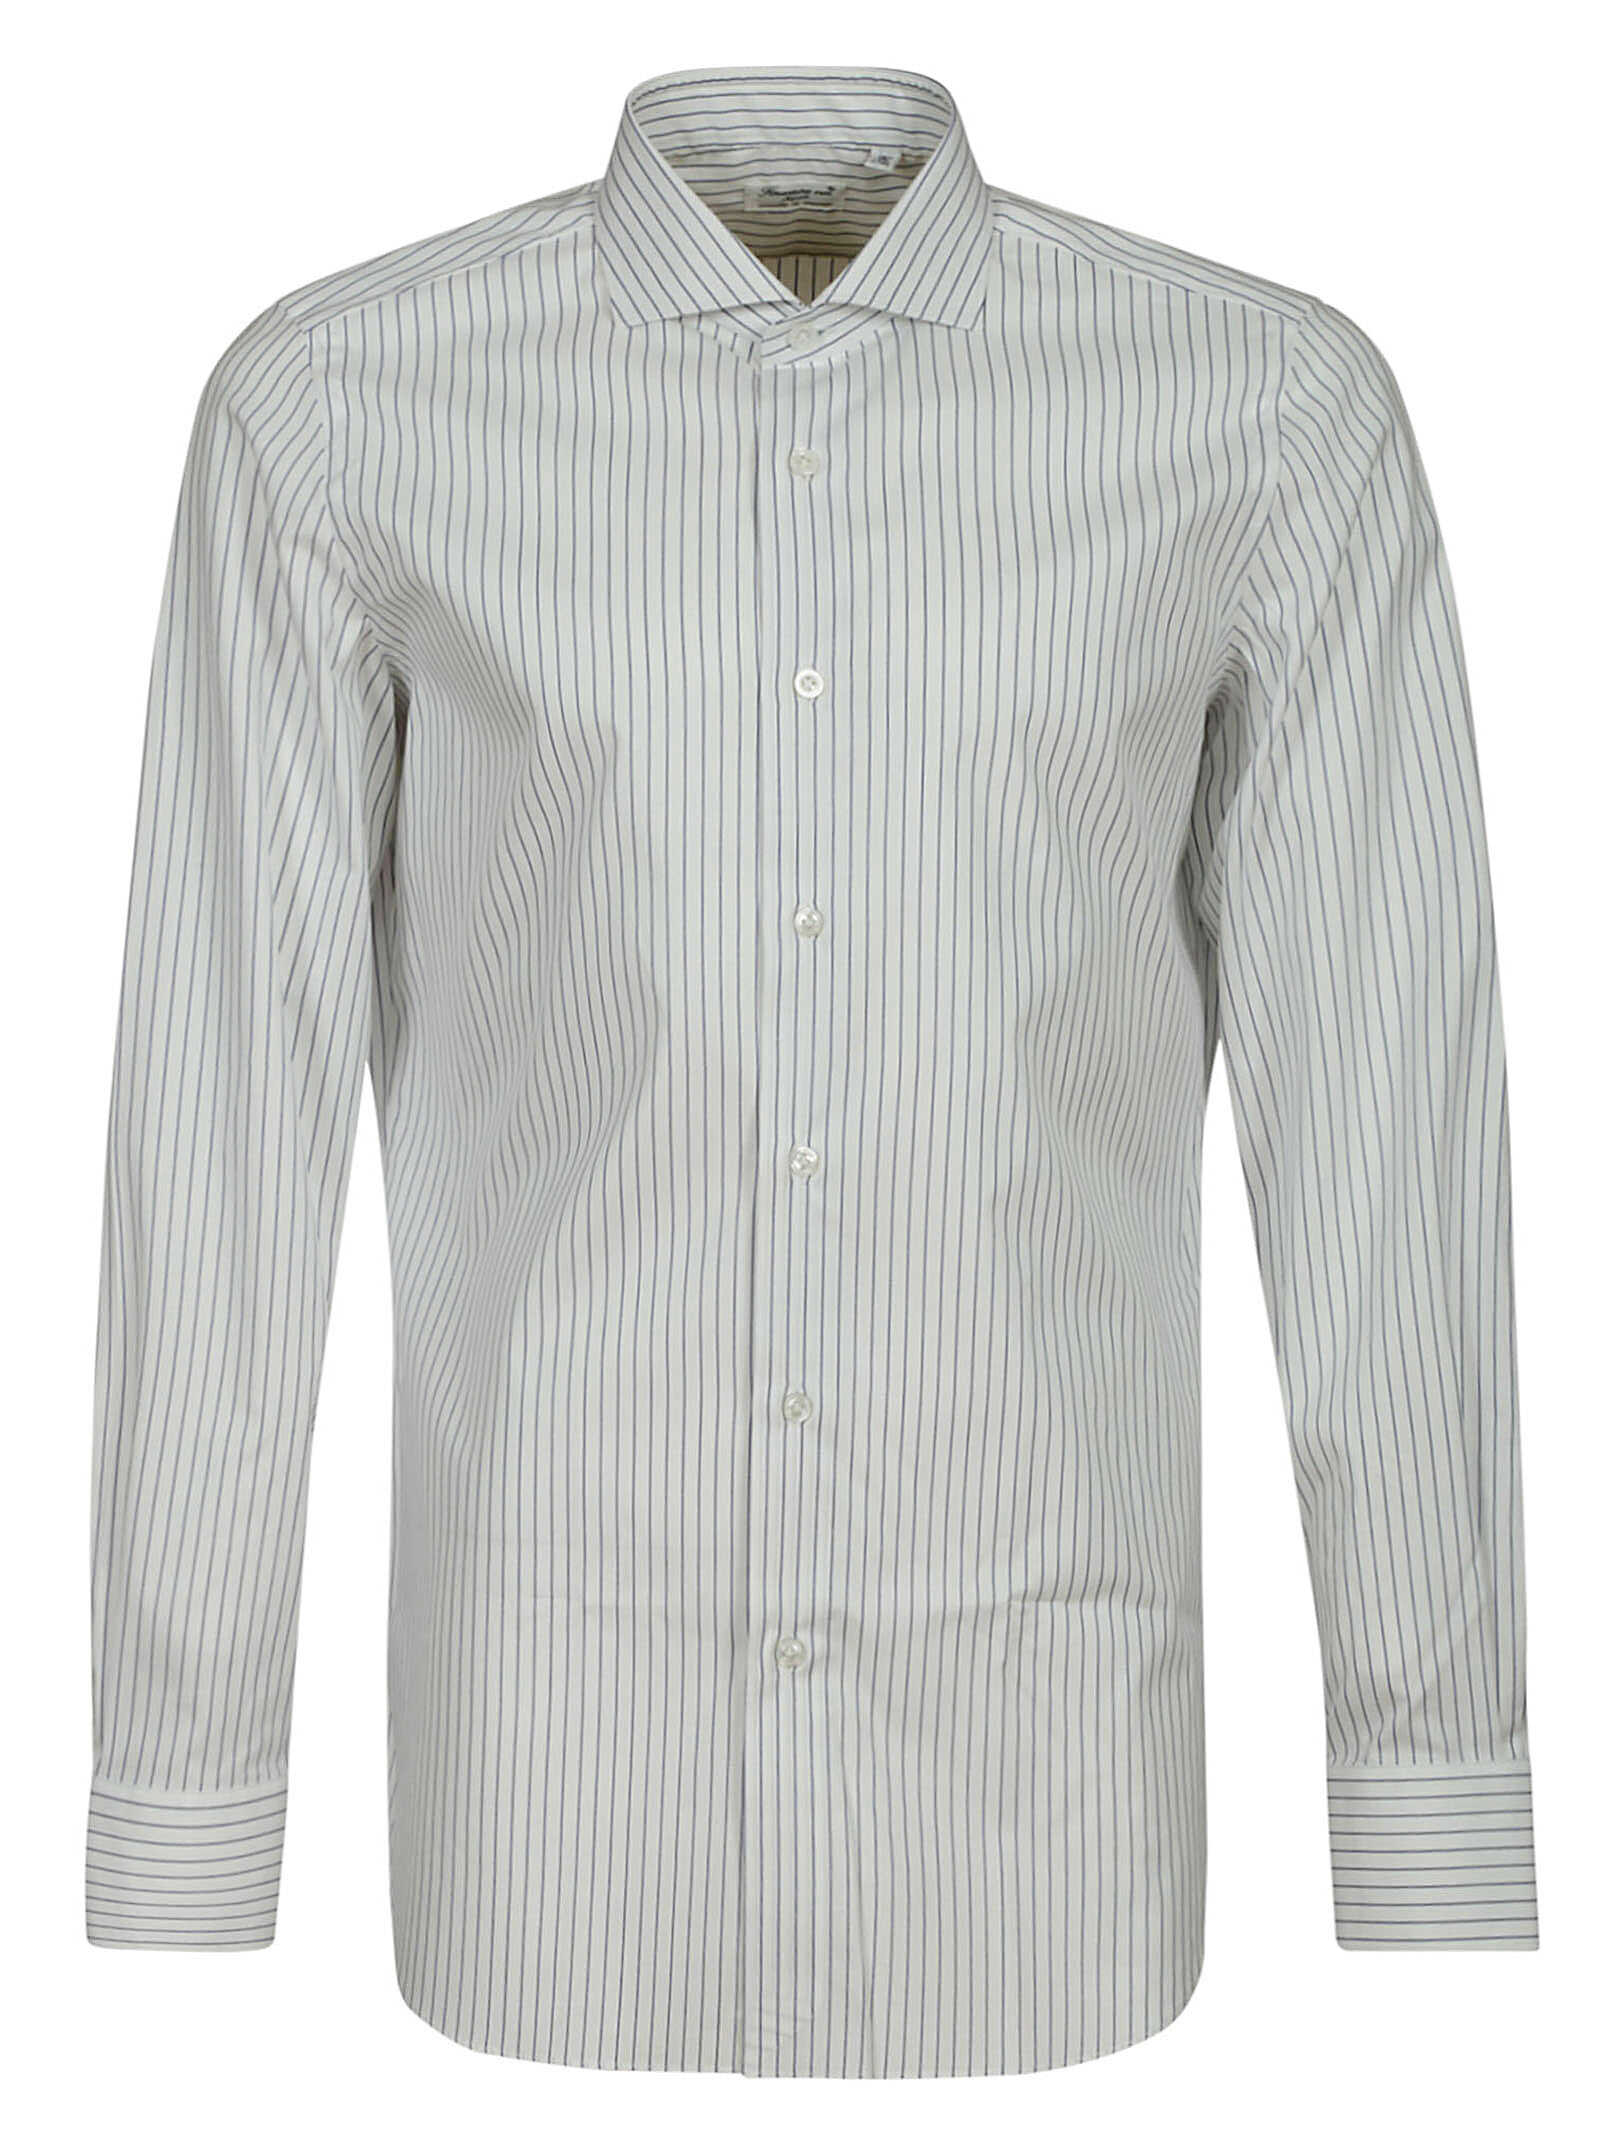 FINAMORE Finamore shirt 012099.C0275 01 Stripes Stripes